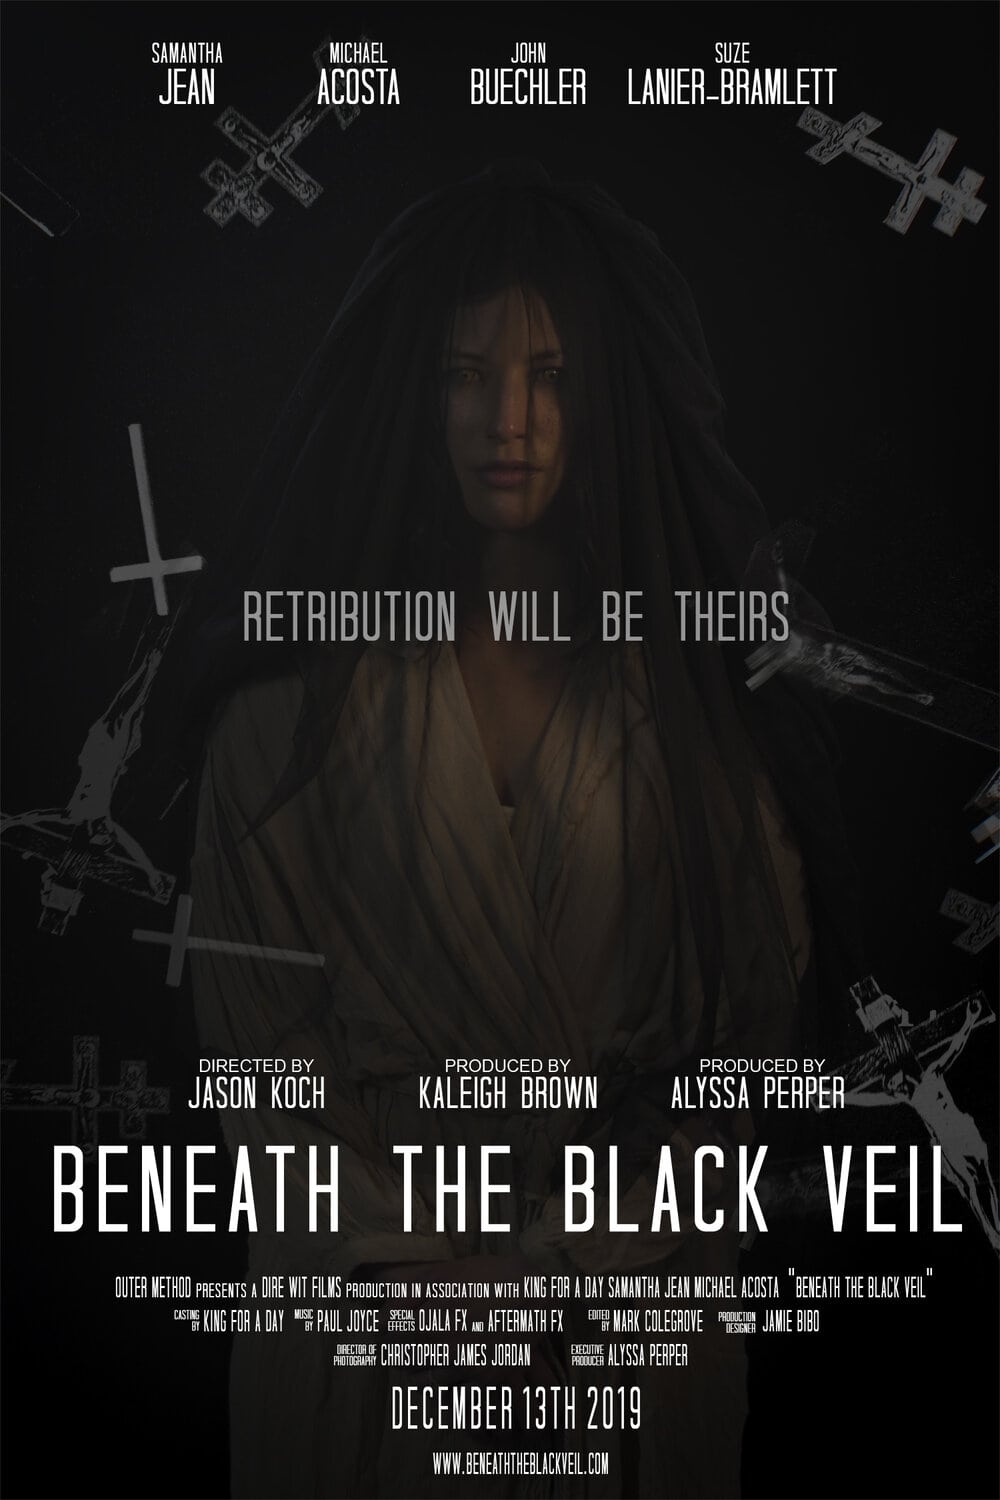 Beneath the Black Veil